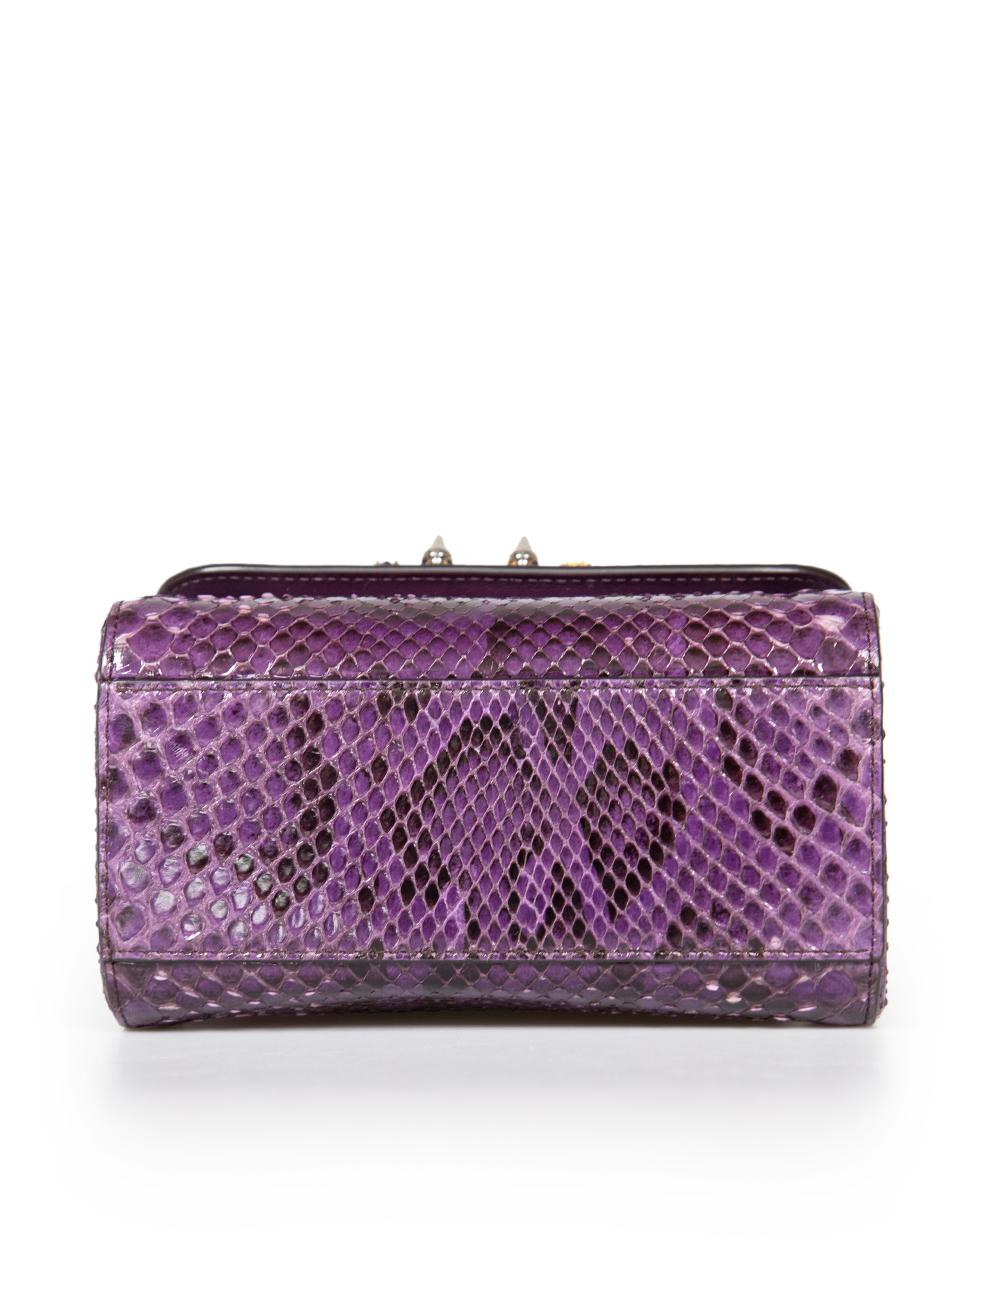 Dolce & Gabbana Limited Edition Purple Snakeskin Miss Sicily Bag 1